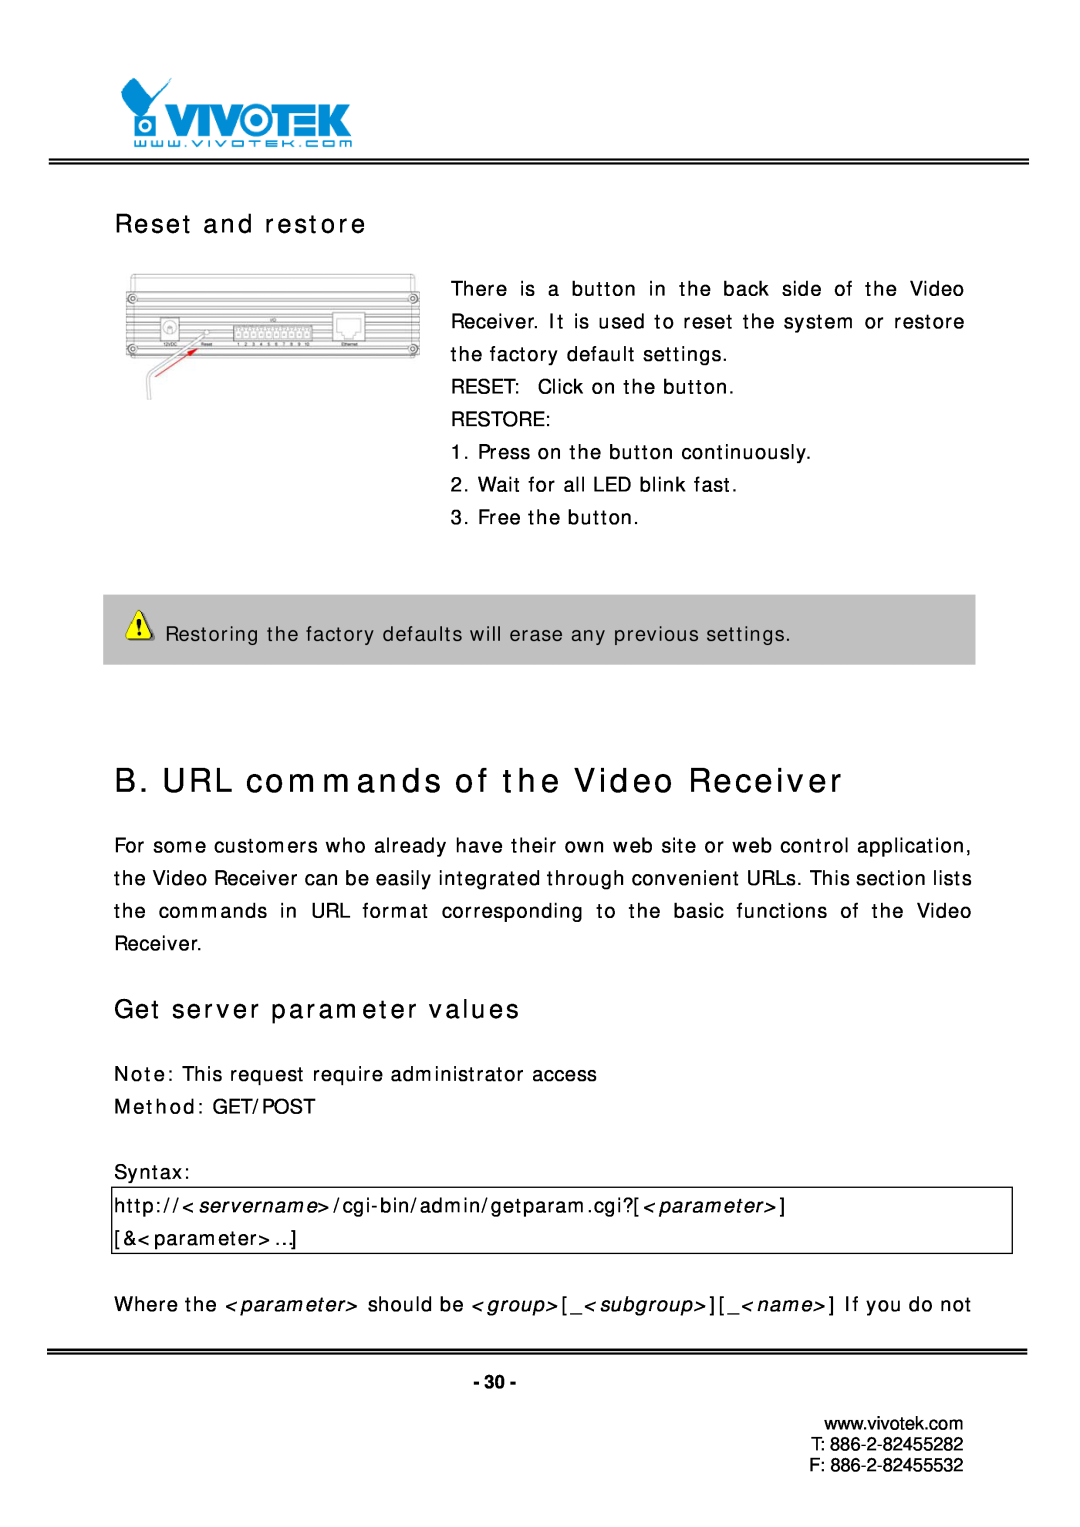 Vivotek RX7101 B. URL commands of the Video Receiver, Reset and restore, Get server parameter values, Method GET/POST 